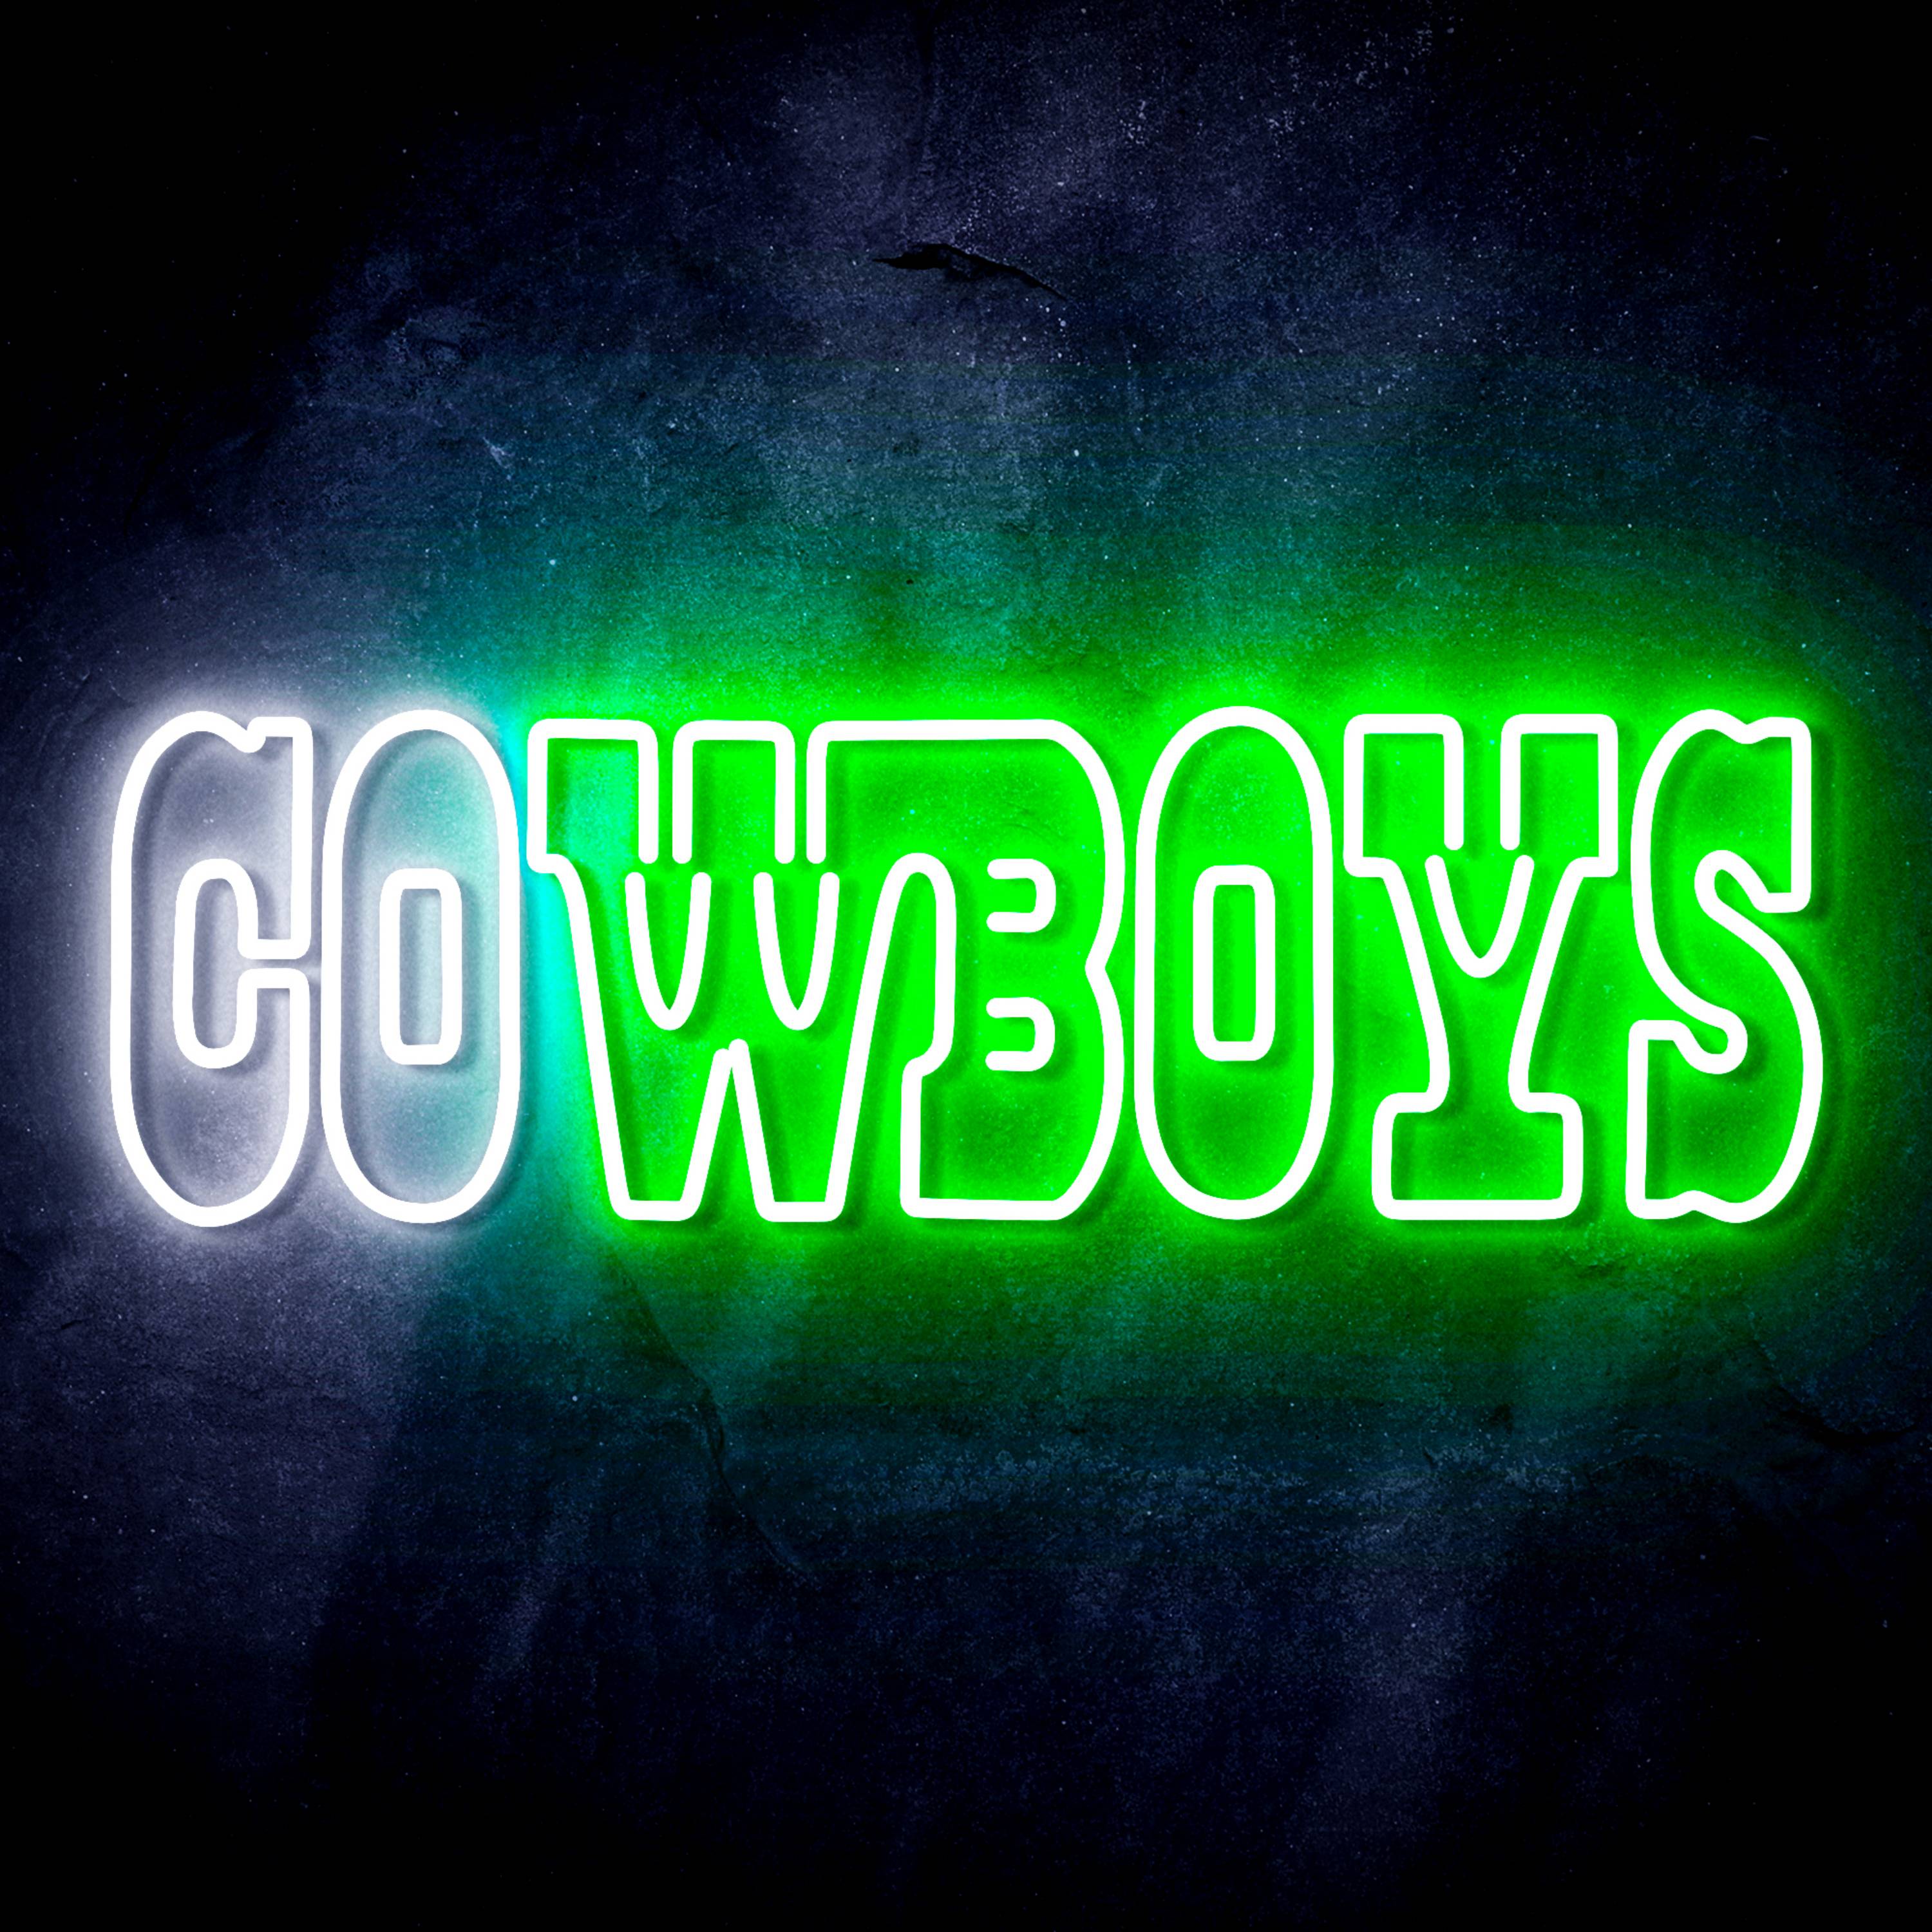 NFL COWBOYS LED Neon Sign